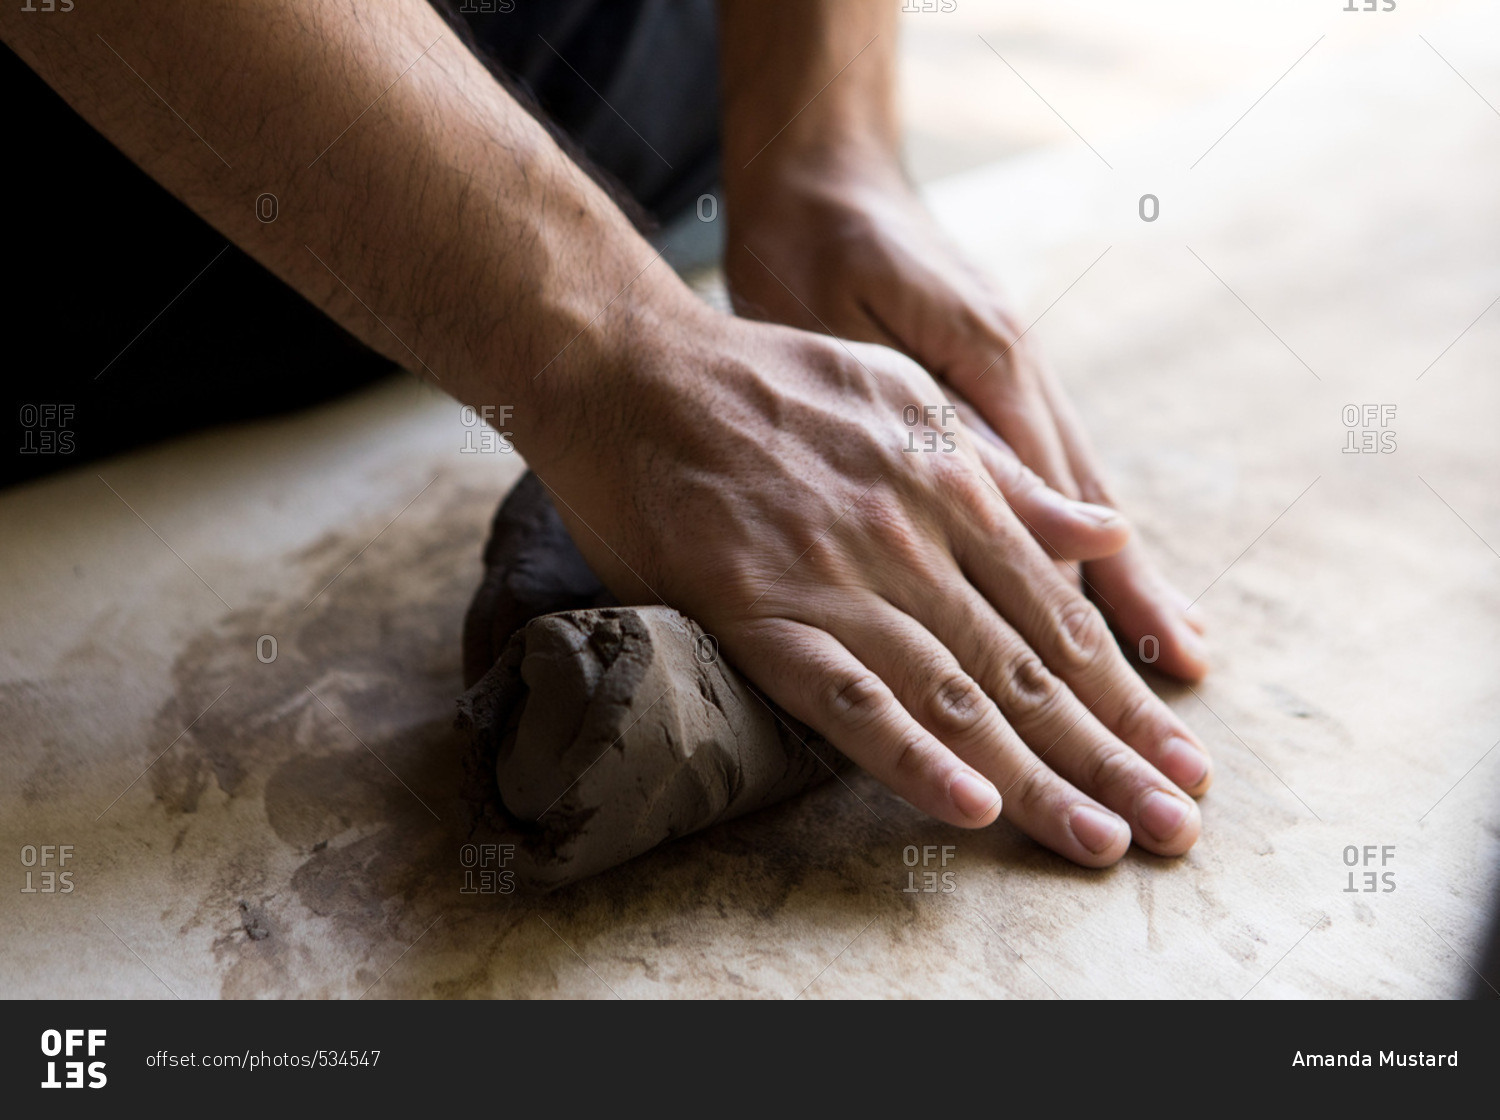 Hands Molding Clay Stock Photo 373073428